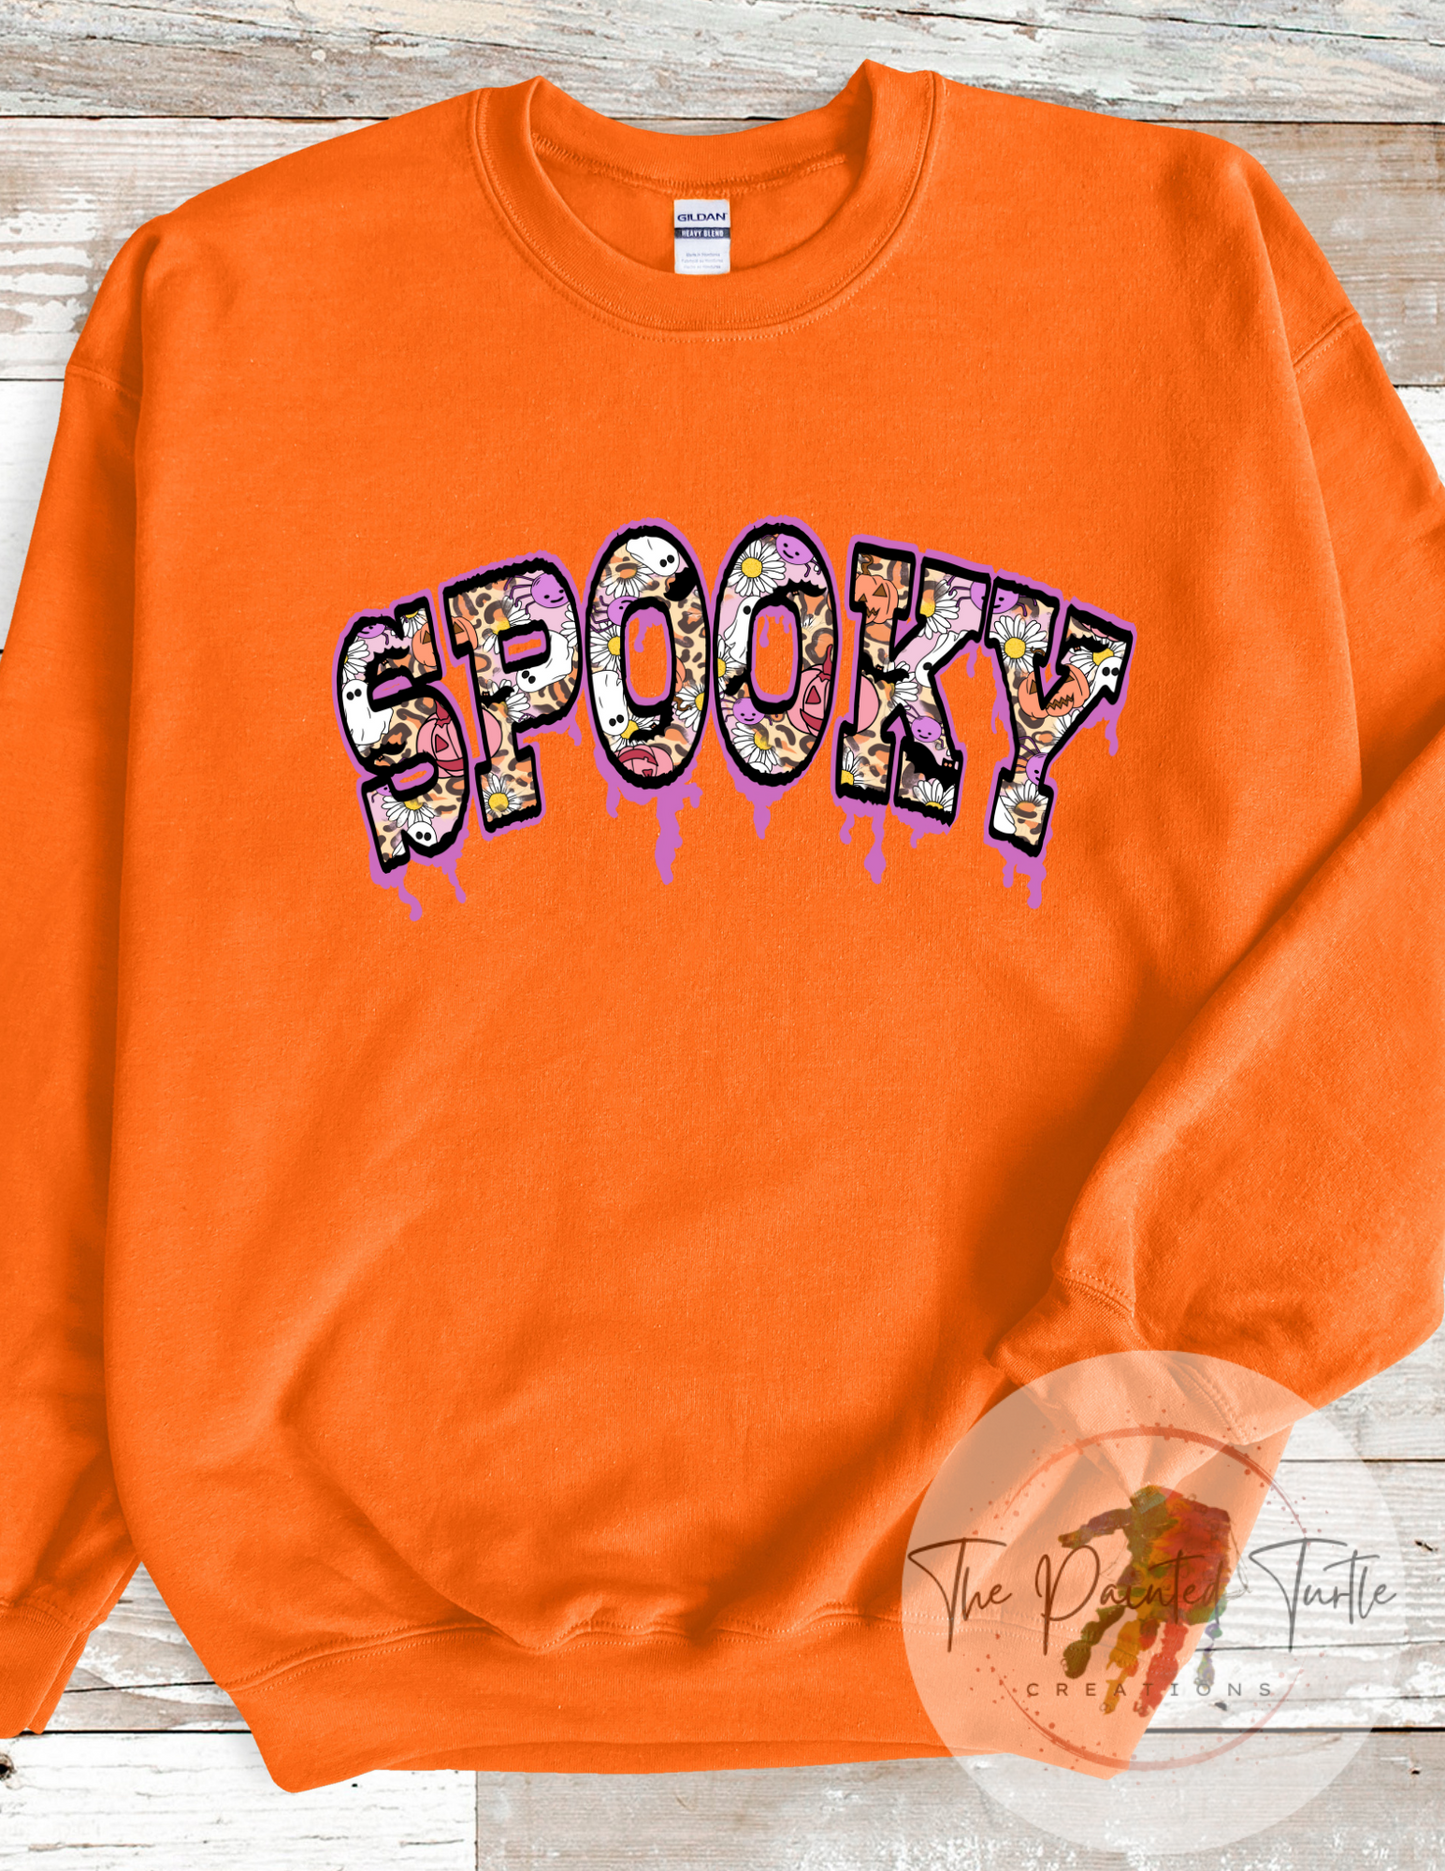 Spooky - Halloween Shirt